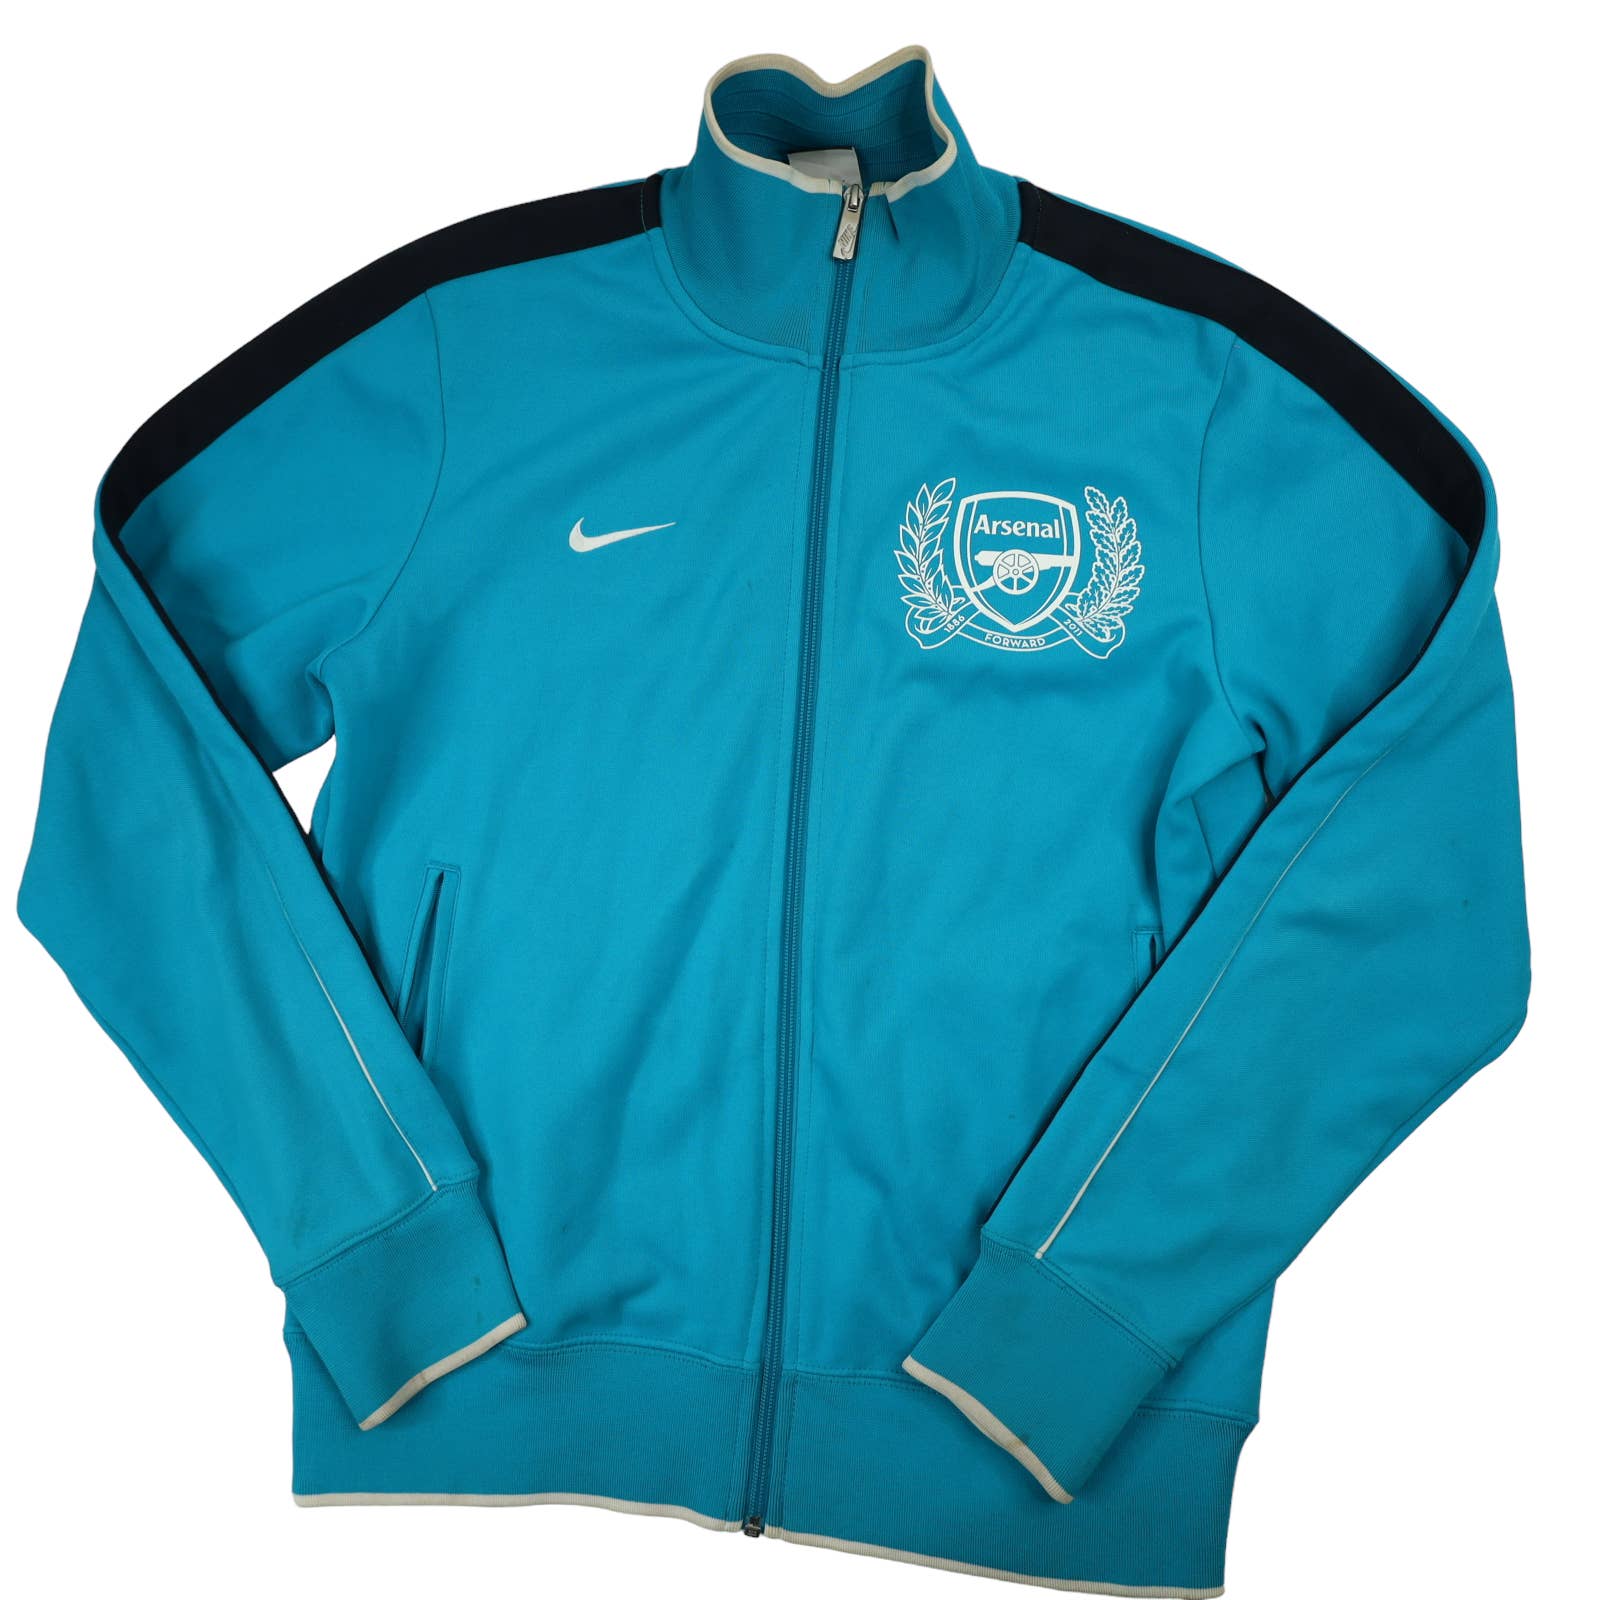 Retro Arsenal Jacket 